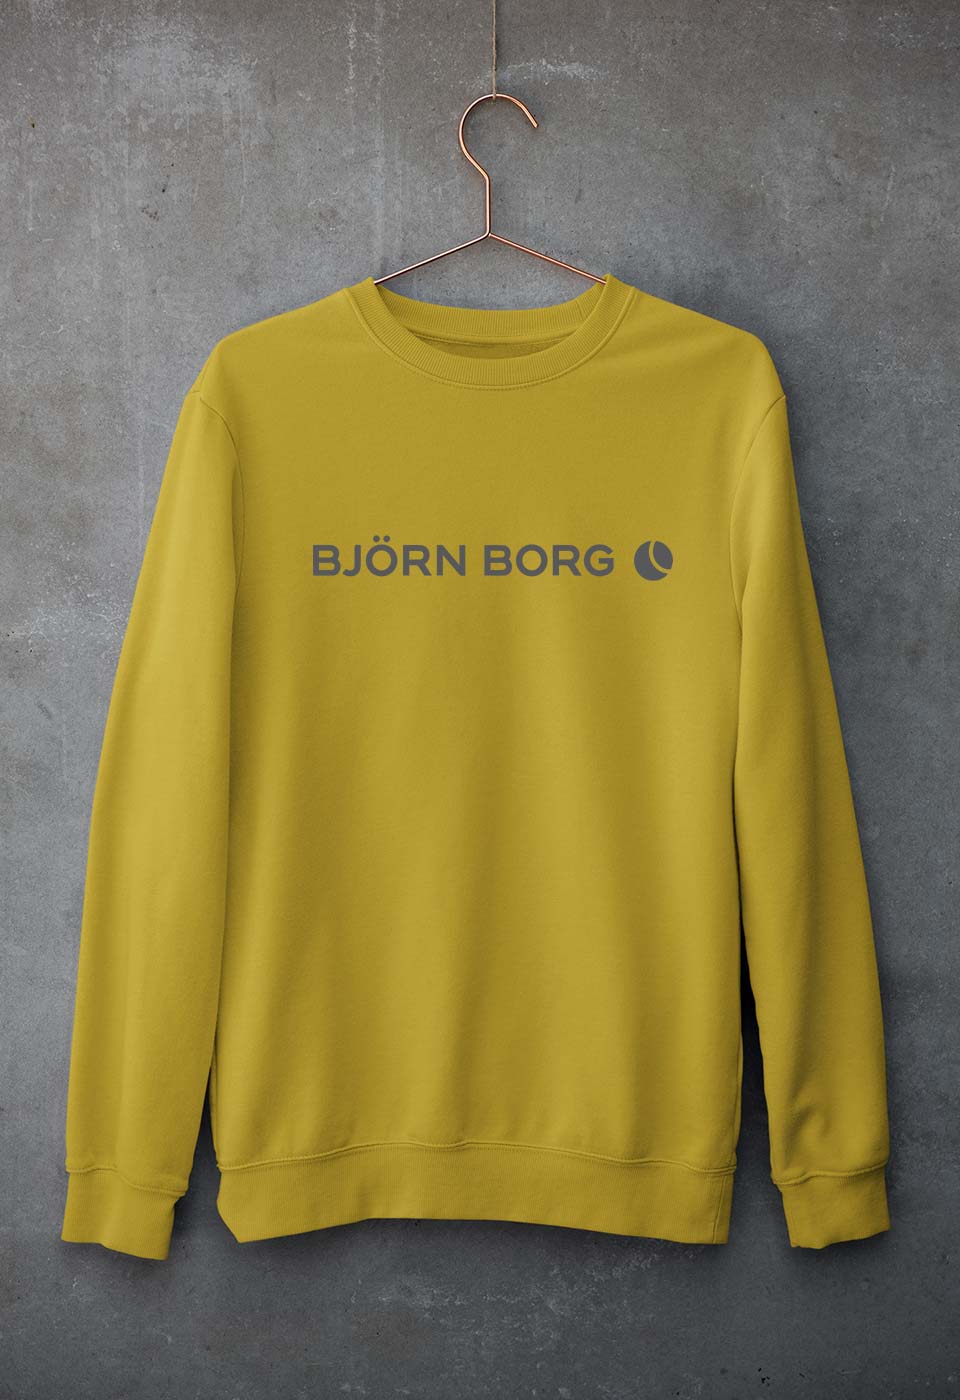 Björn Borg Unisex Sweatshirt for Men/Women-S(40 Inches)-Mustard Yellow-Ektarfa.online